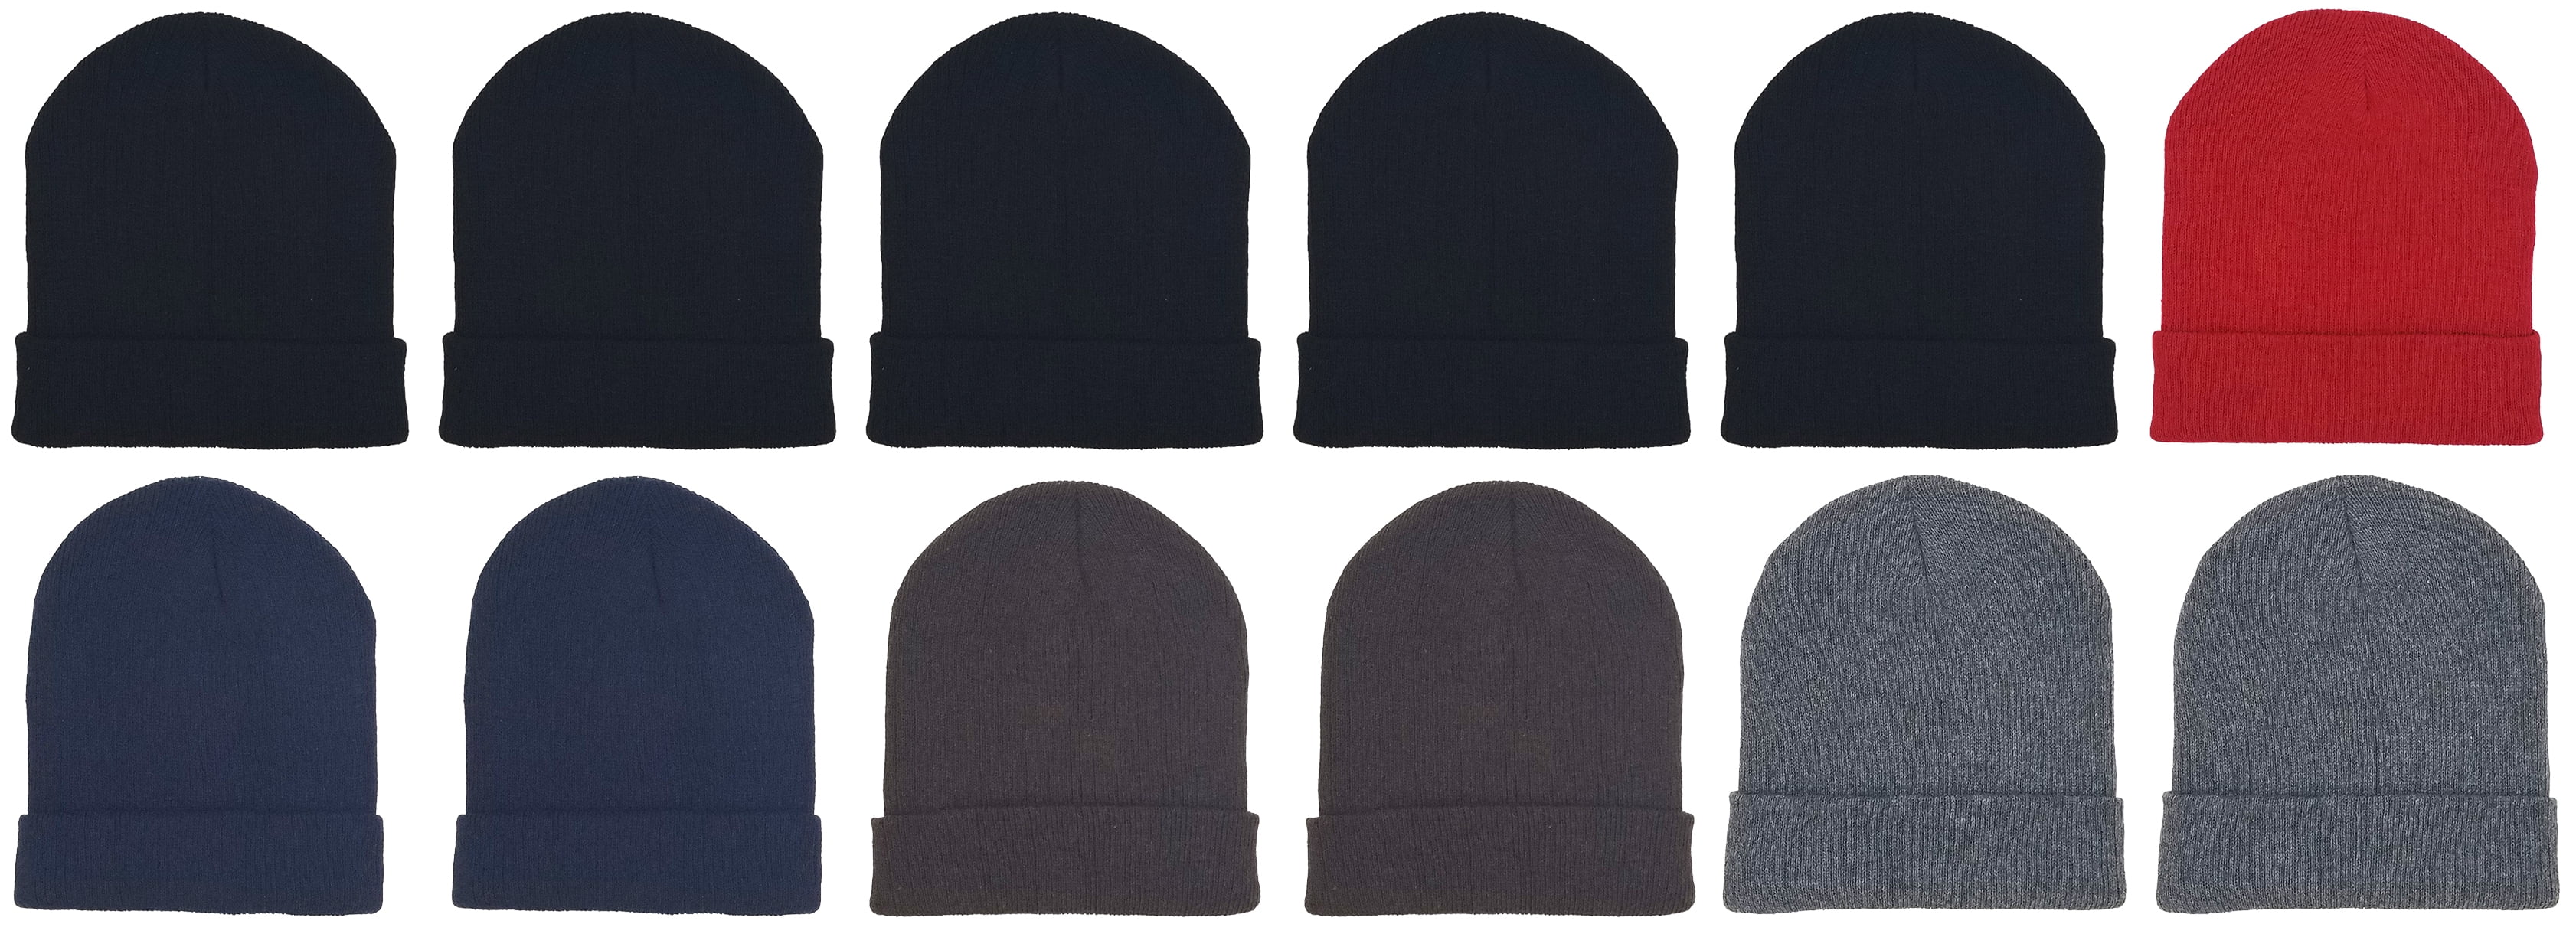 Warm Cozy Knitted Cuffed Skull Cap Wholesale 12 Pack Winter Beanie Hats for Men Women 